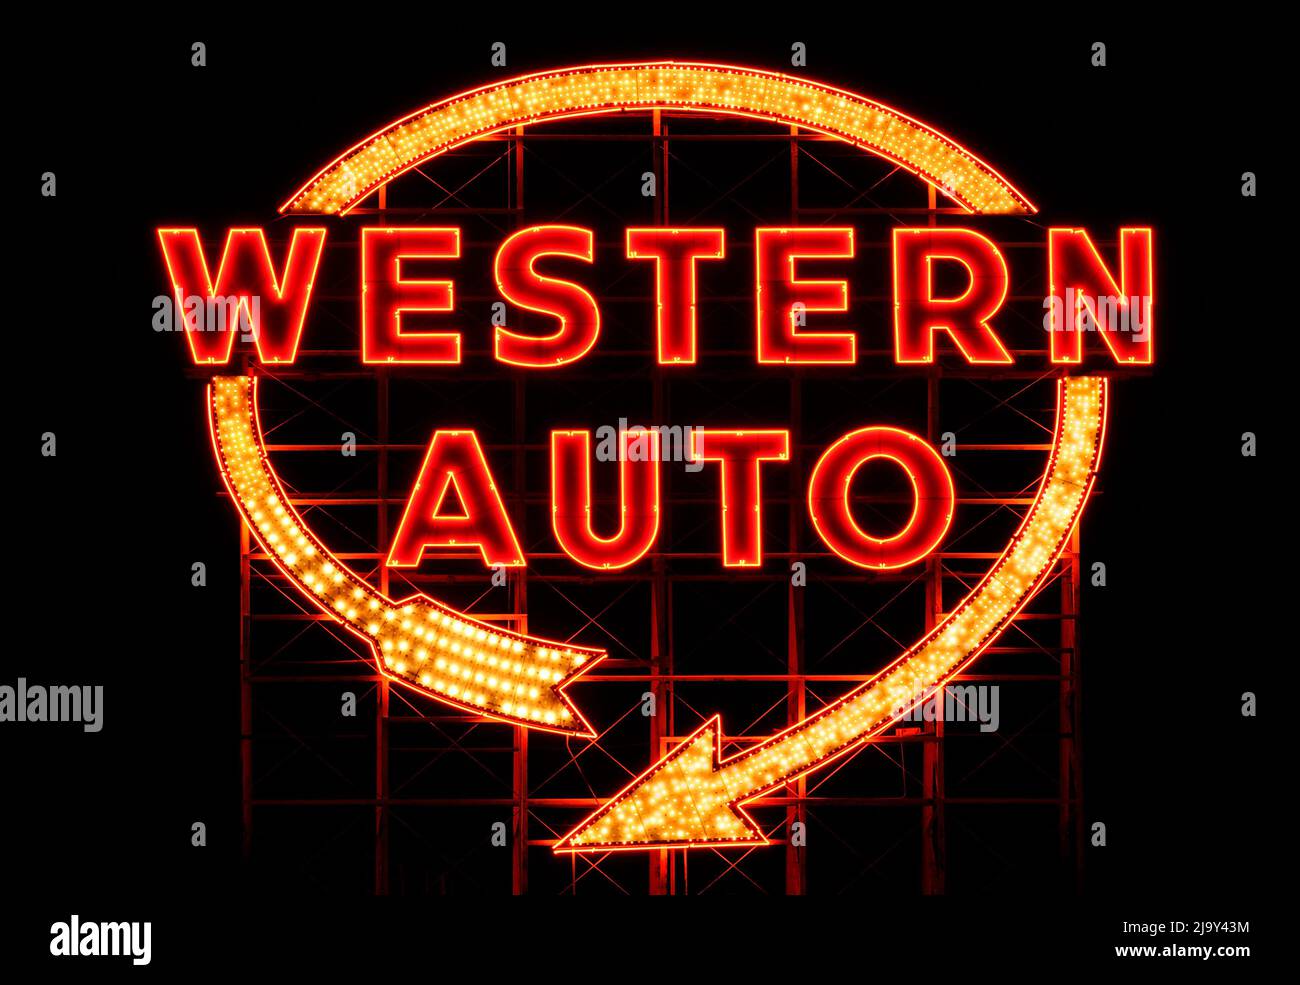 Western Auto sign at night in Kansas City, Missouri, USA Stock Photo